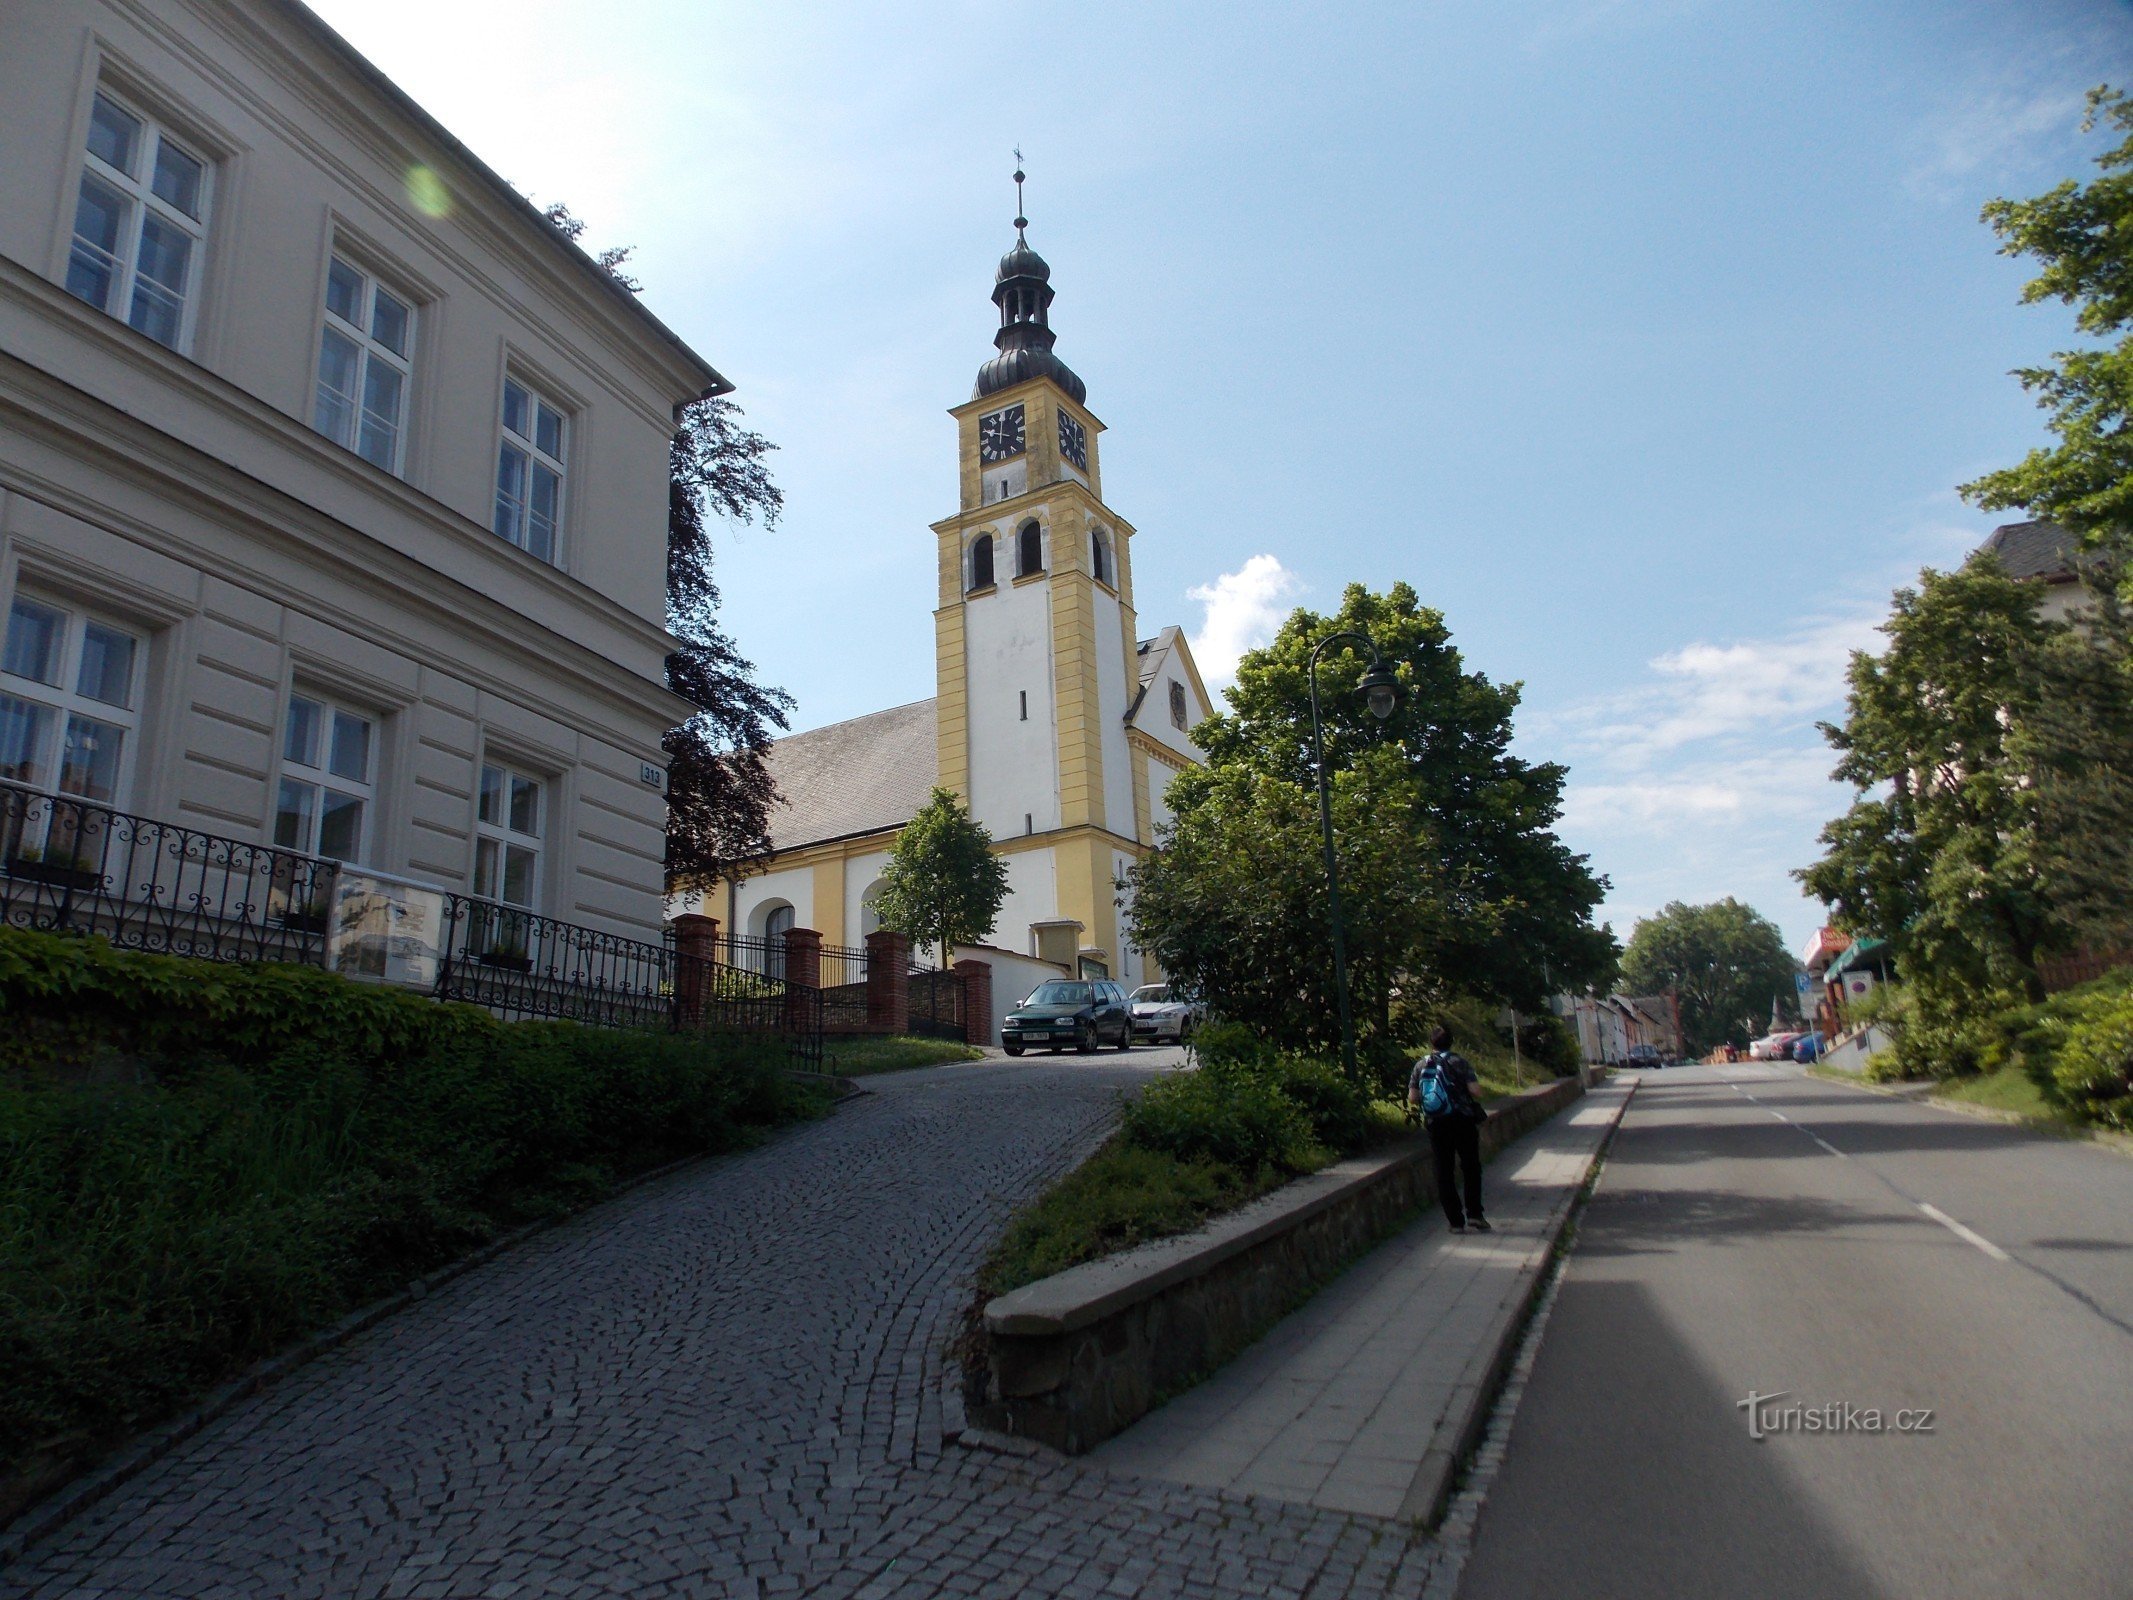 Die klassizistische Kirche Peter und Paul in Hradec nad Moravicí